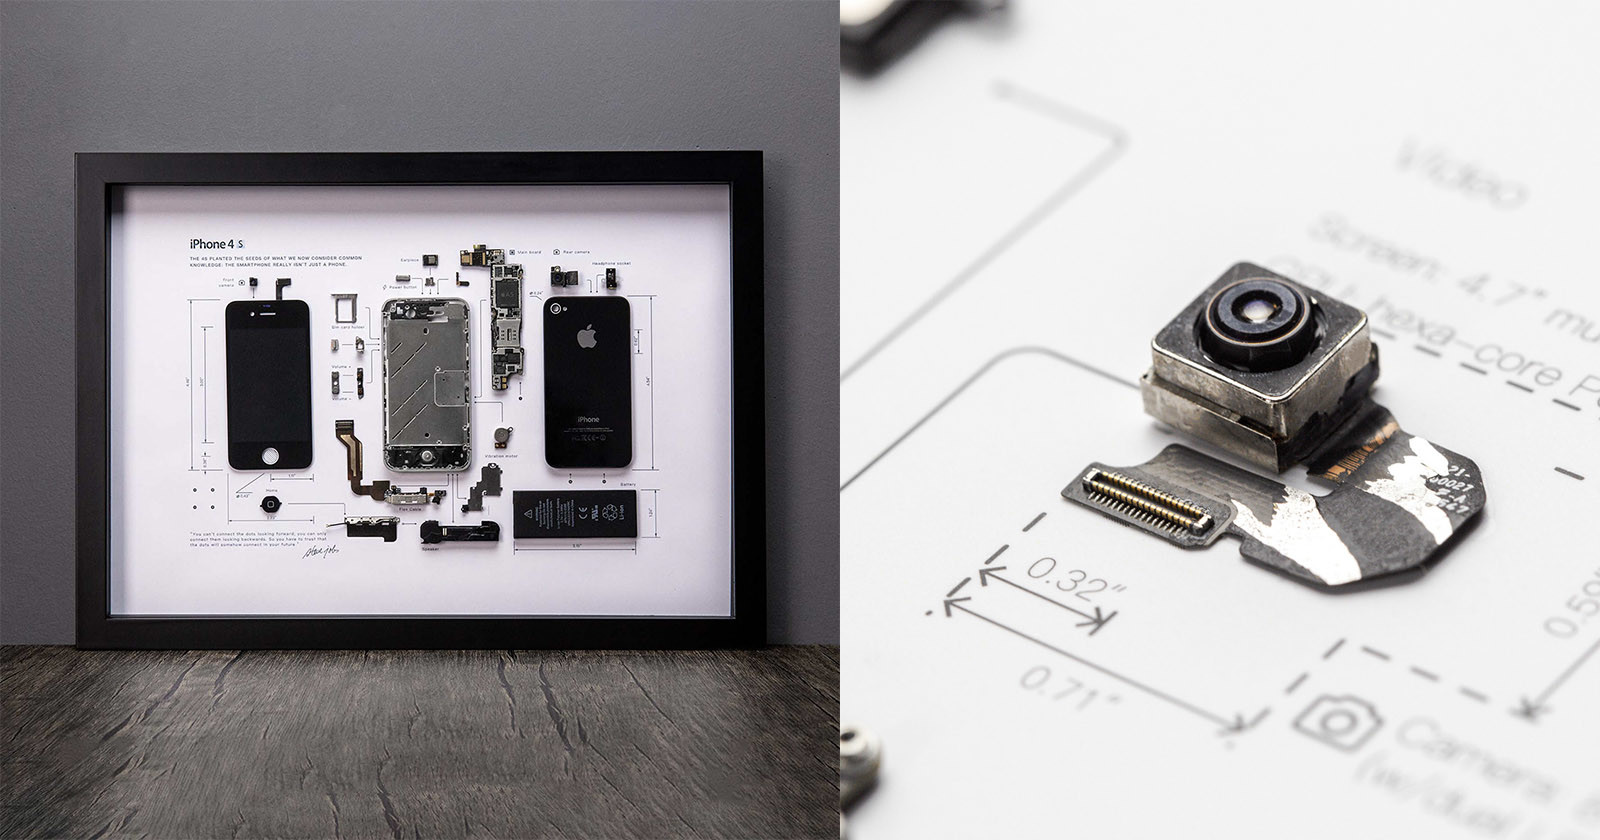  grid studio repurposes discarded electronics into beautiful art 